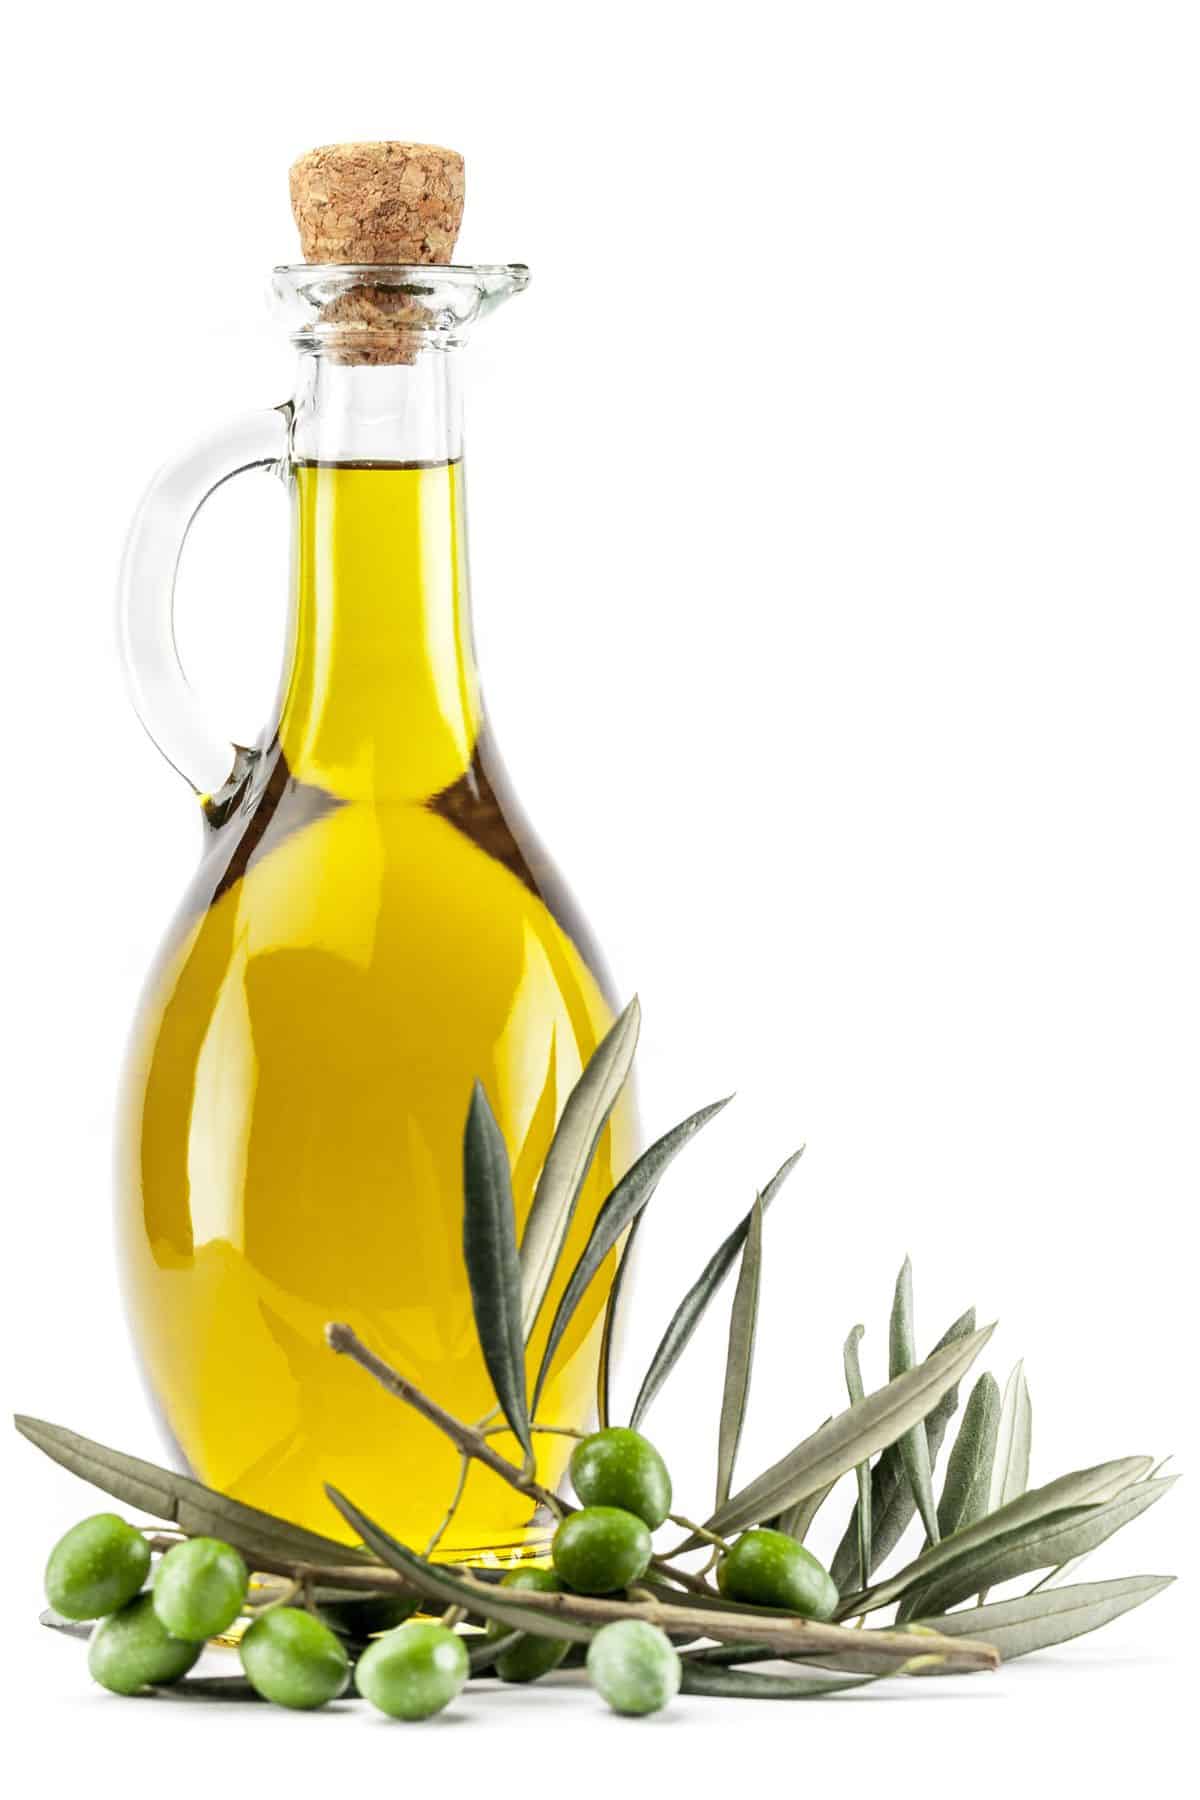 a bottle of olive oil next to a sprig of olives.